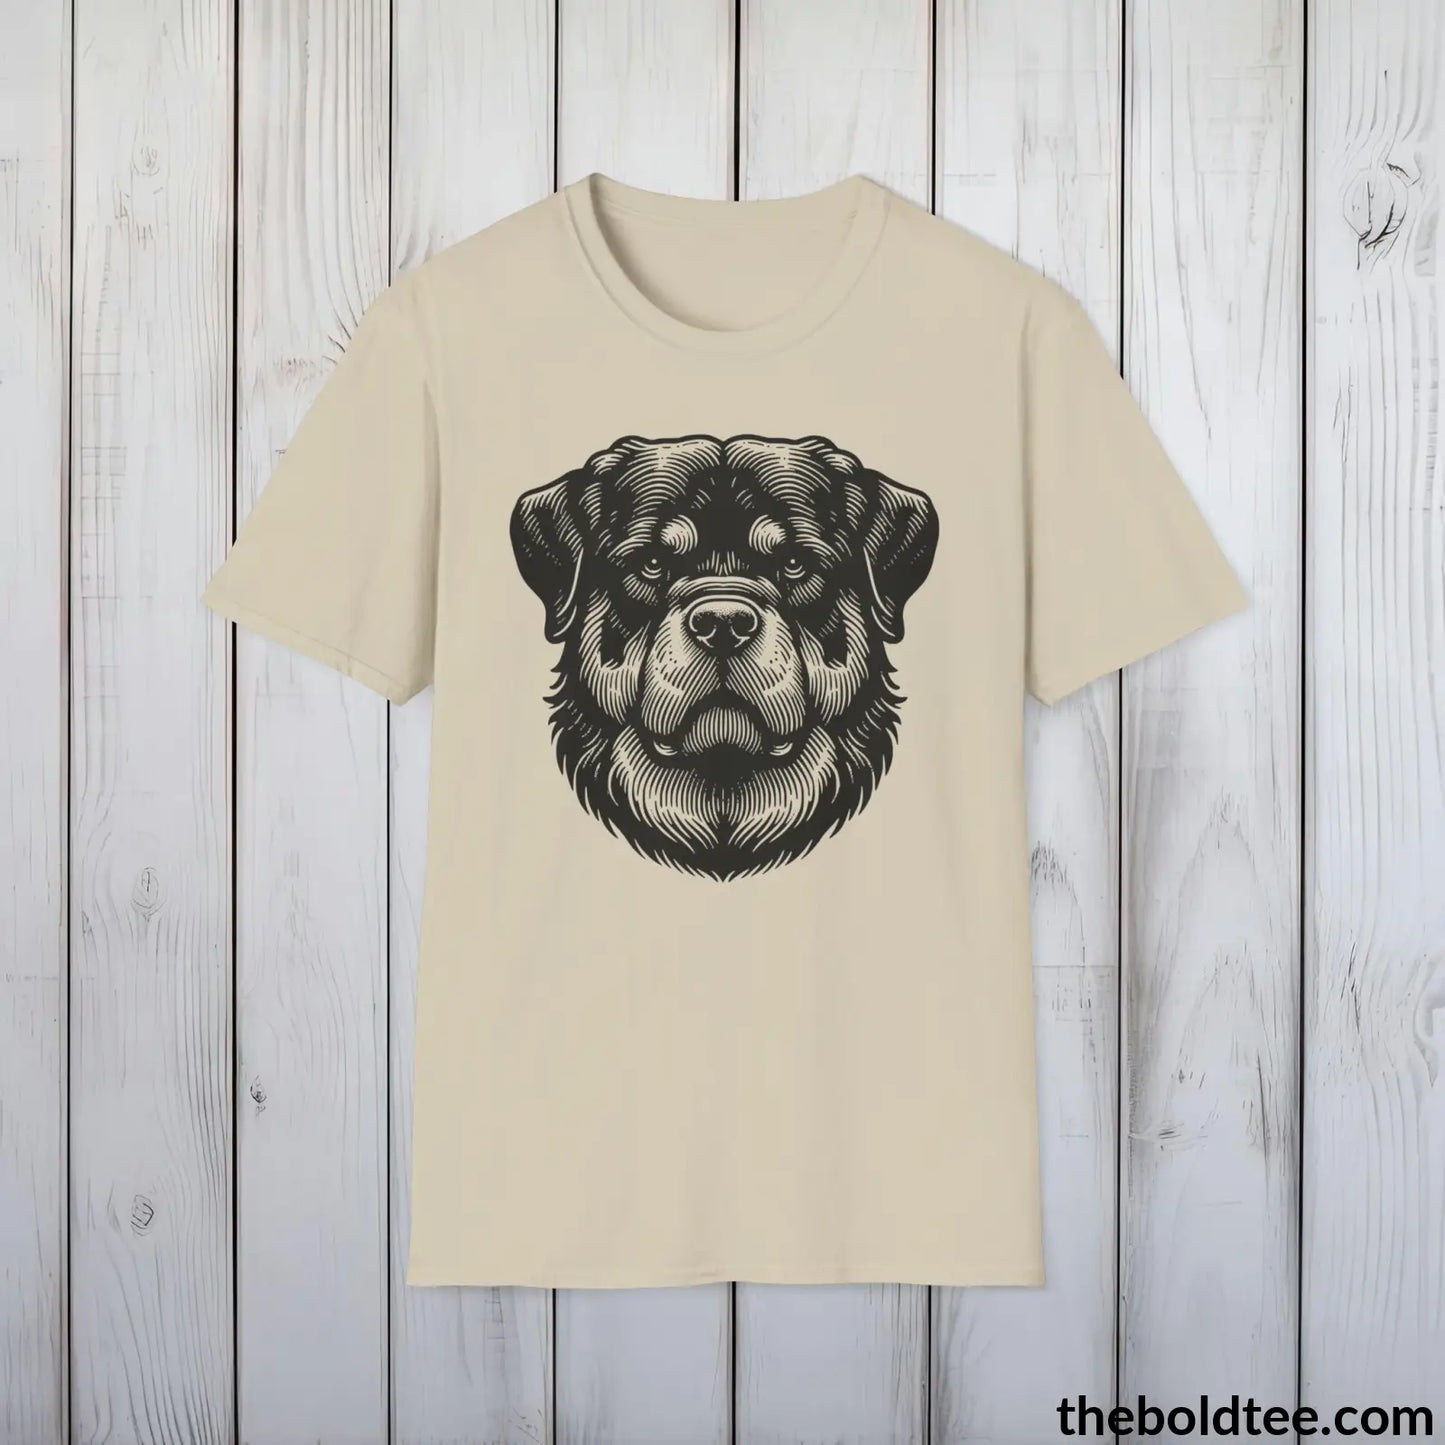 Vintage Rottweiler Dog Tee - Sustainable & Soft Cotton Crewneck Unisex T - Shirt 9 Bold Colors Sand